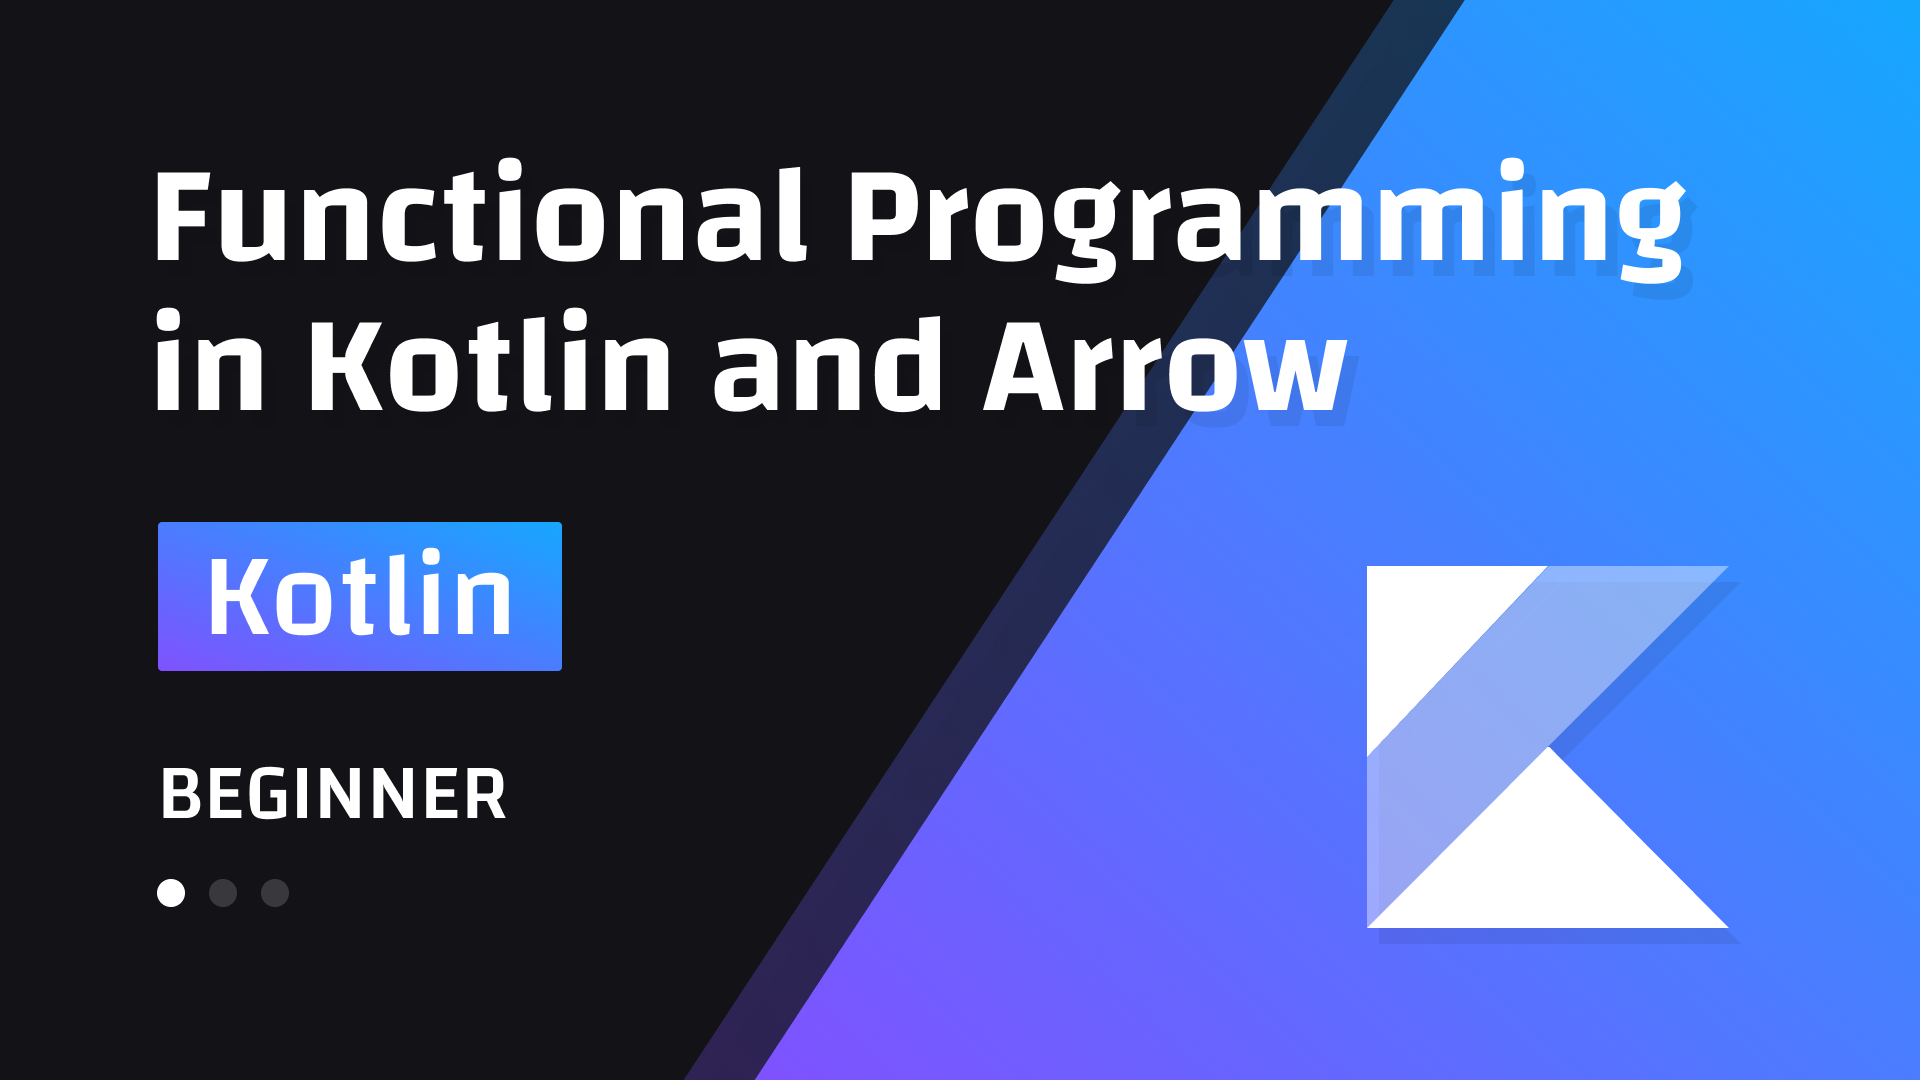 Functional Programming in Kotlin and Arrow